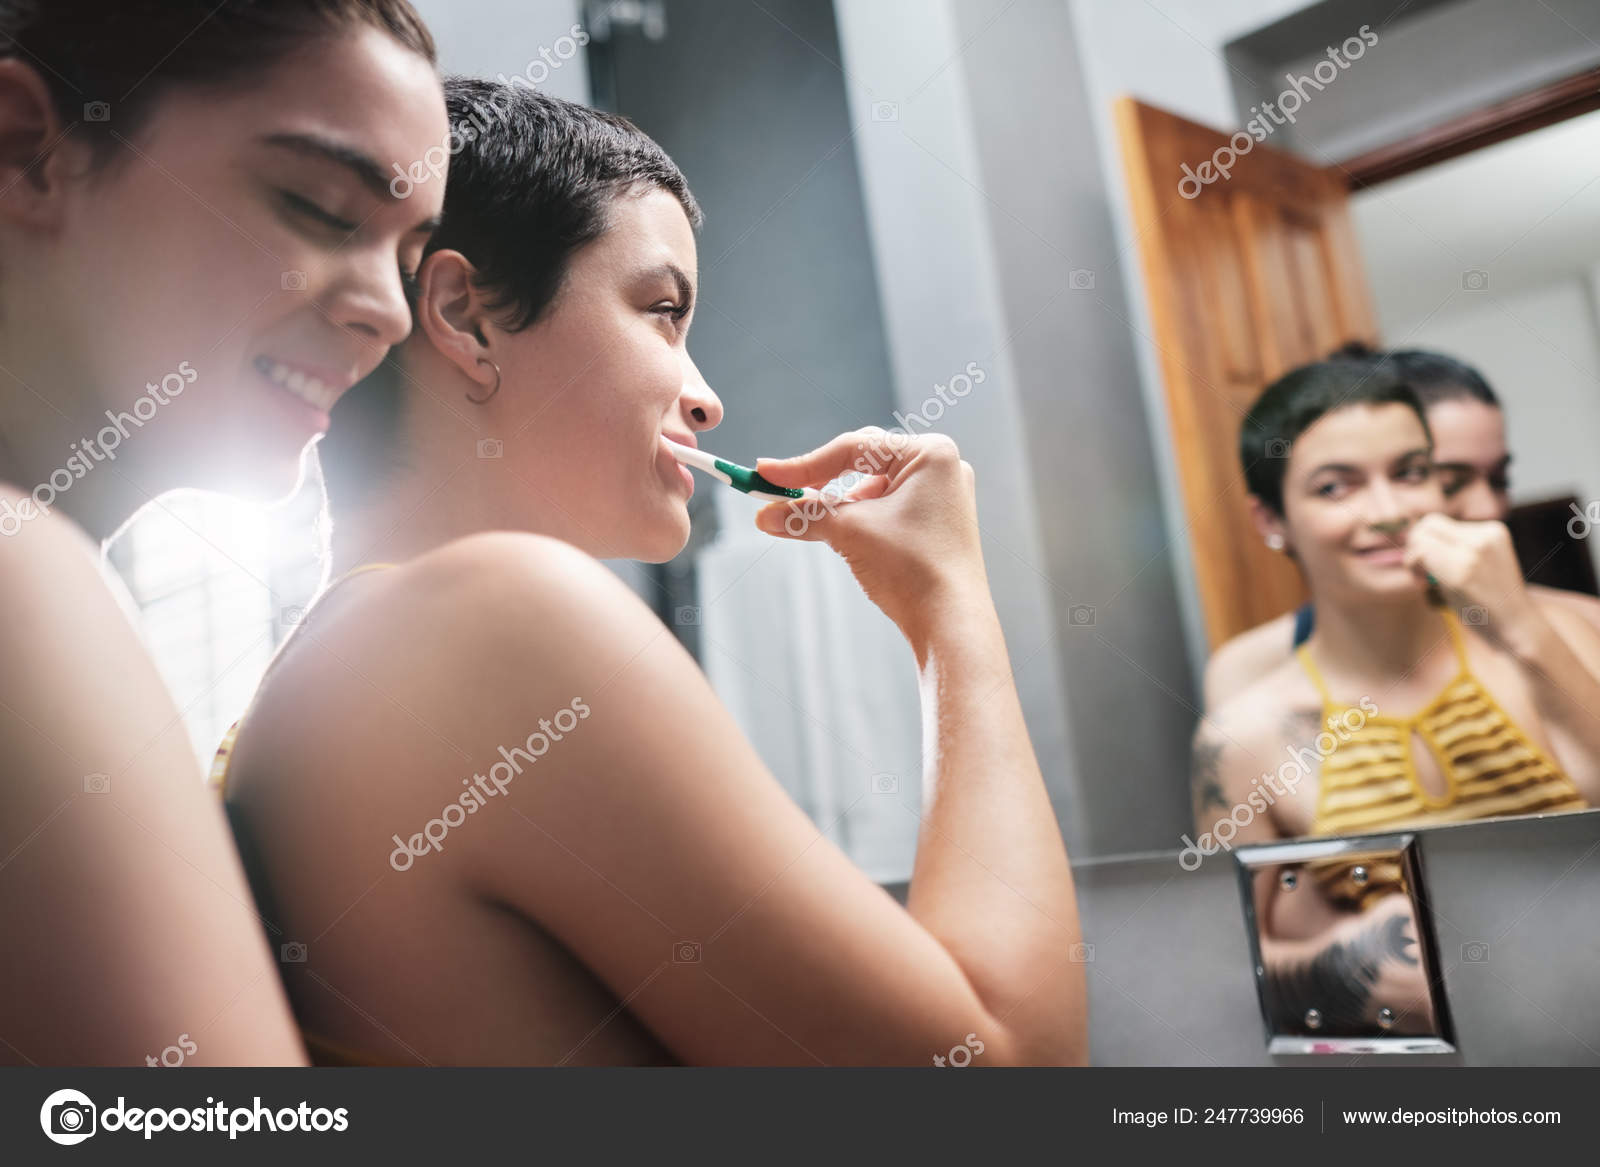 lesbian girls in shower nude gallerie